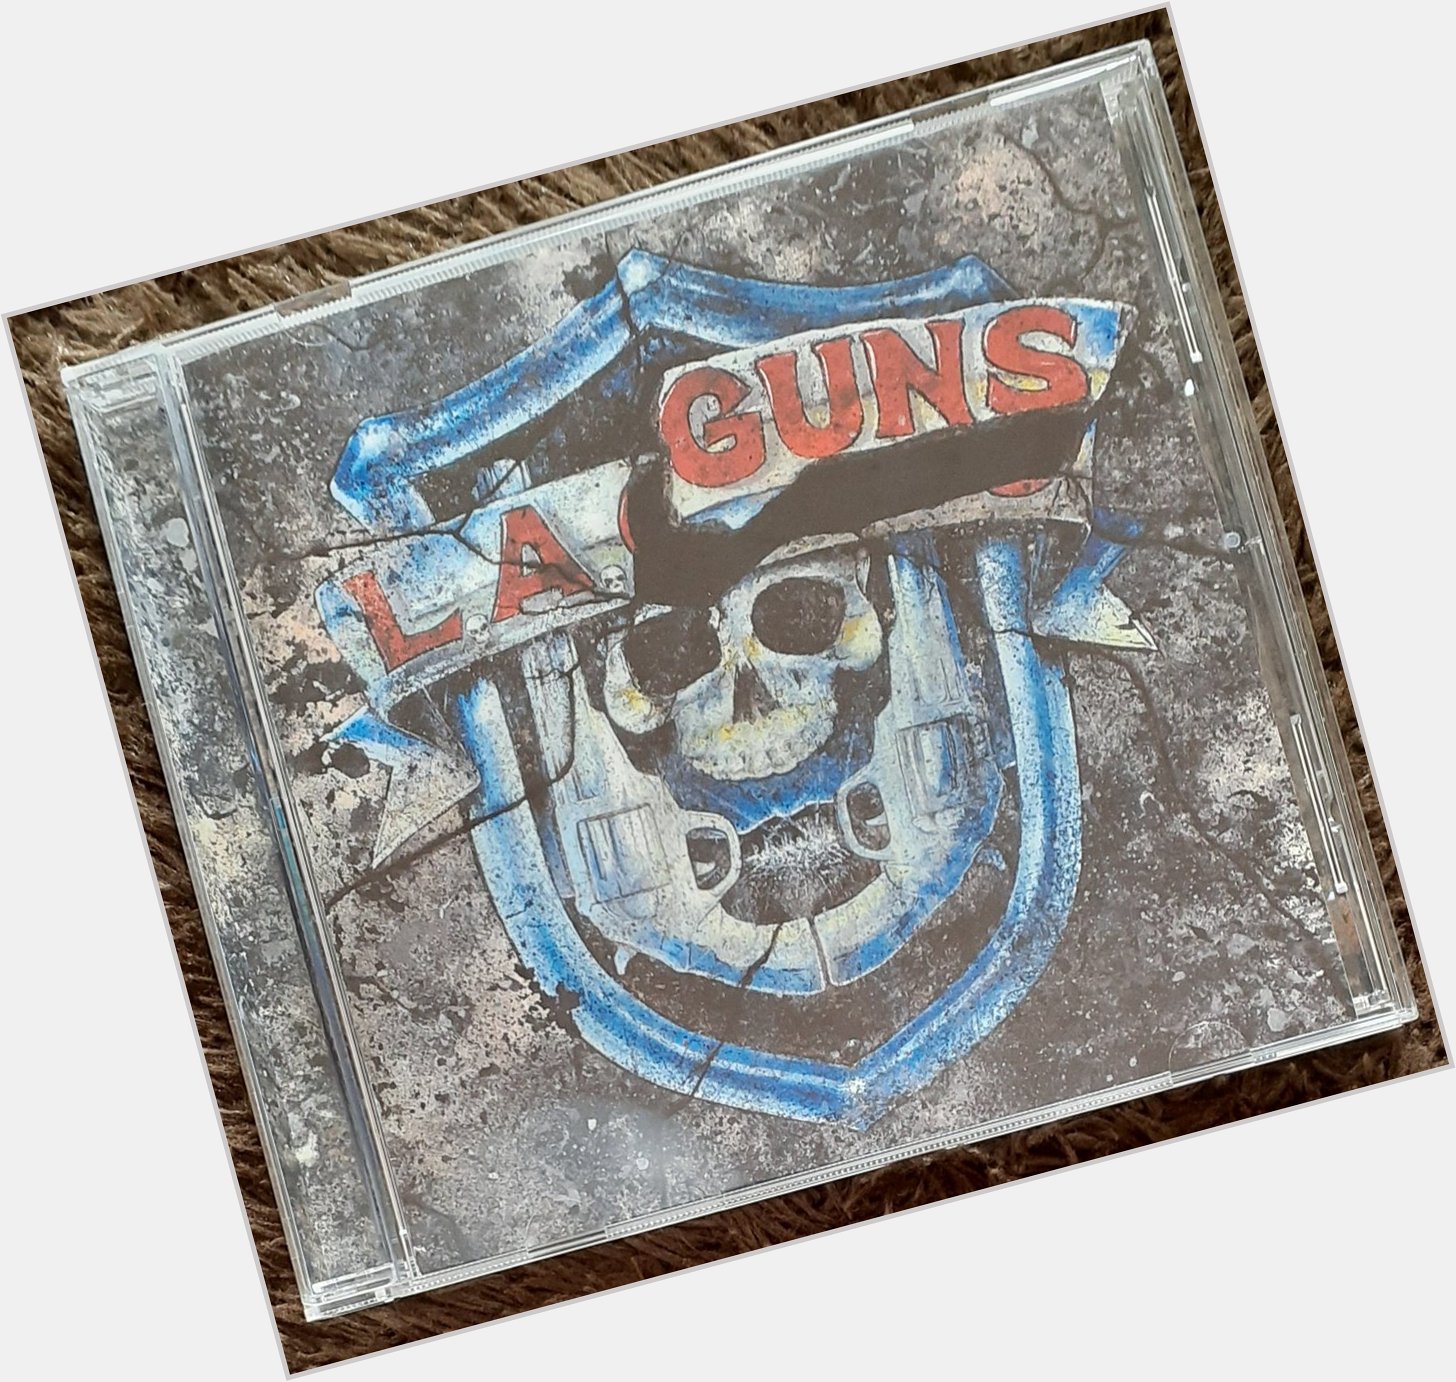 Happy Birthday Tracii Guns       L.A.GUNS  THE MISSING PEACE          Speed      